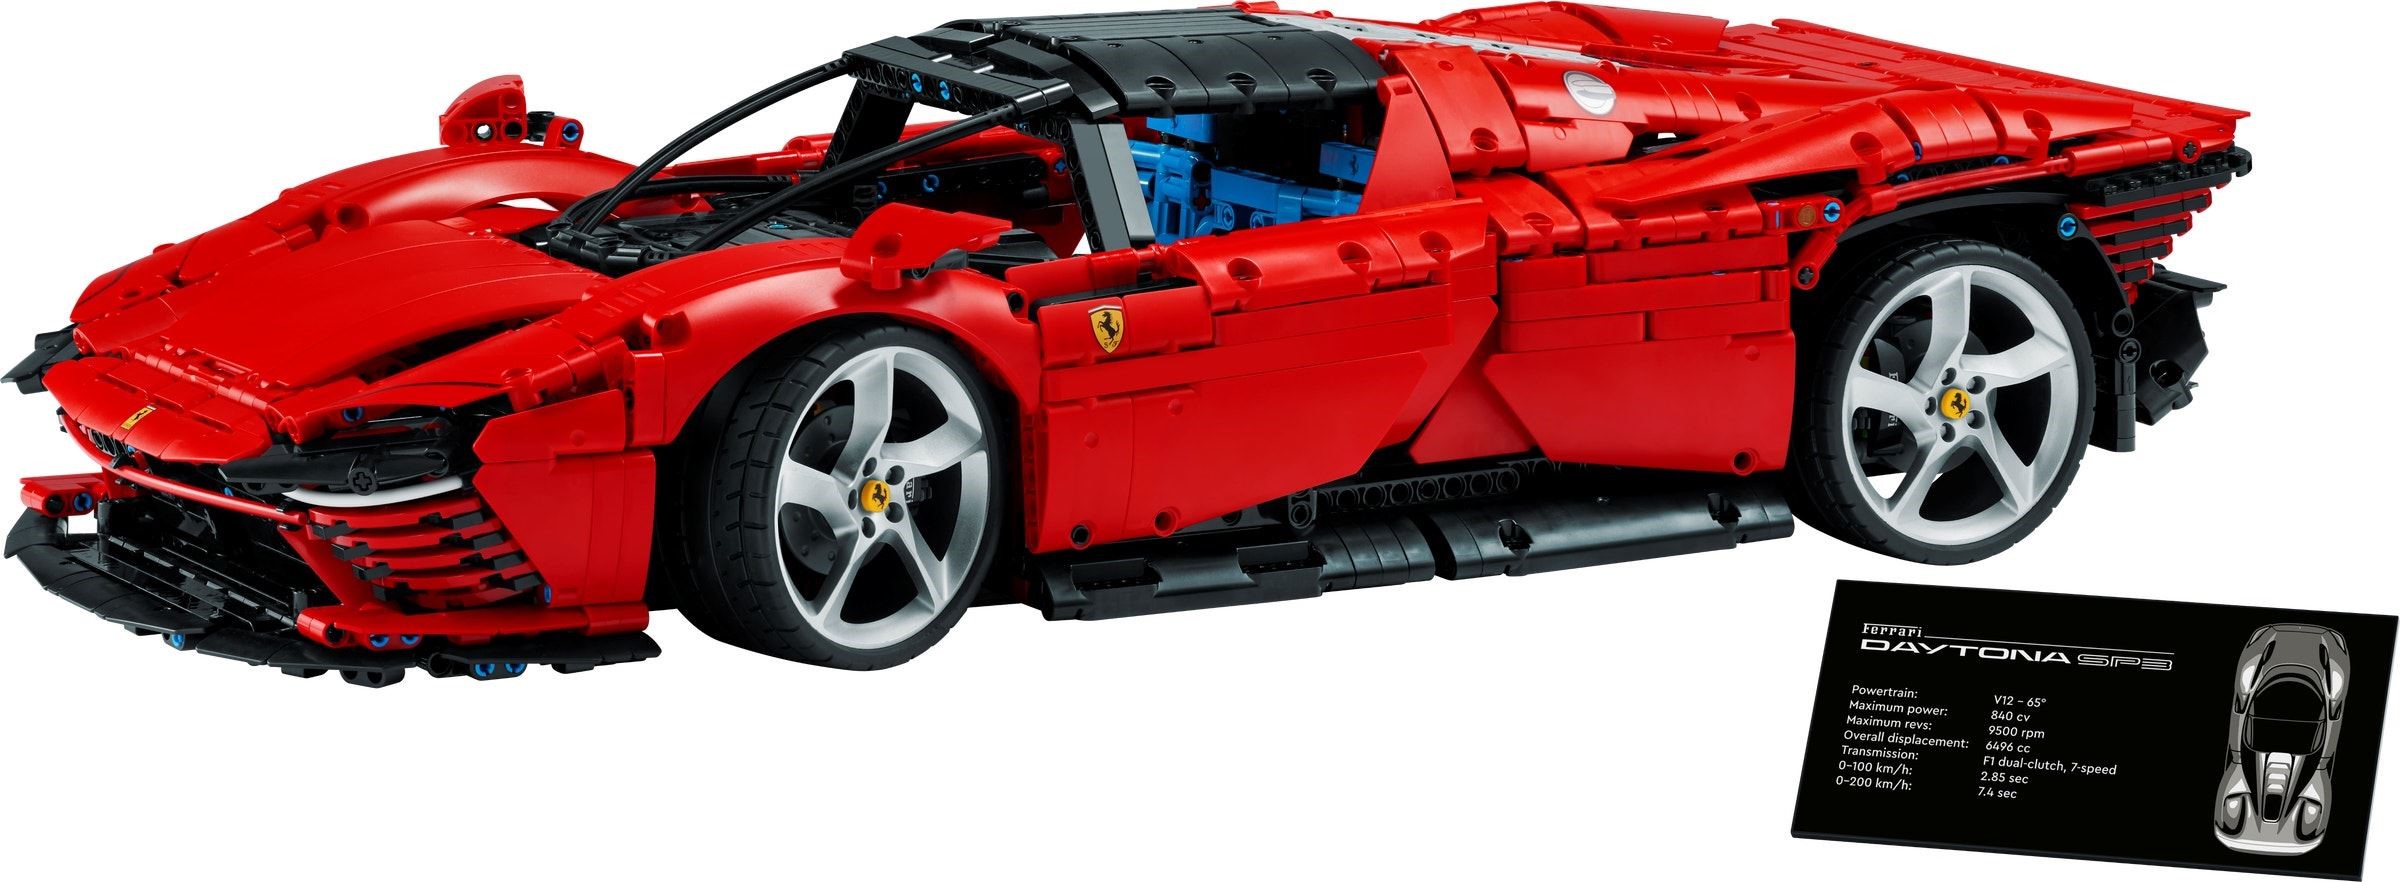 LEGO Technic Ferrari Daytona SP3 Has Butterfly Billionaire Doors